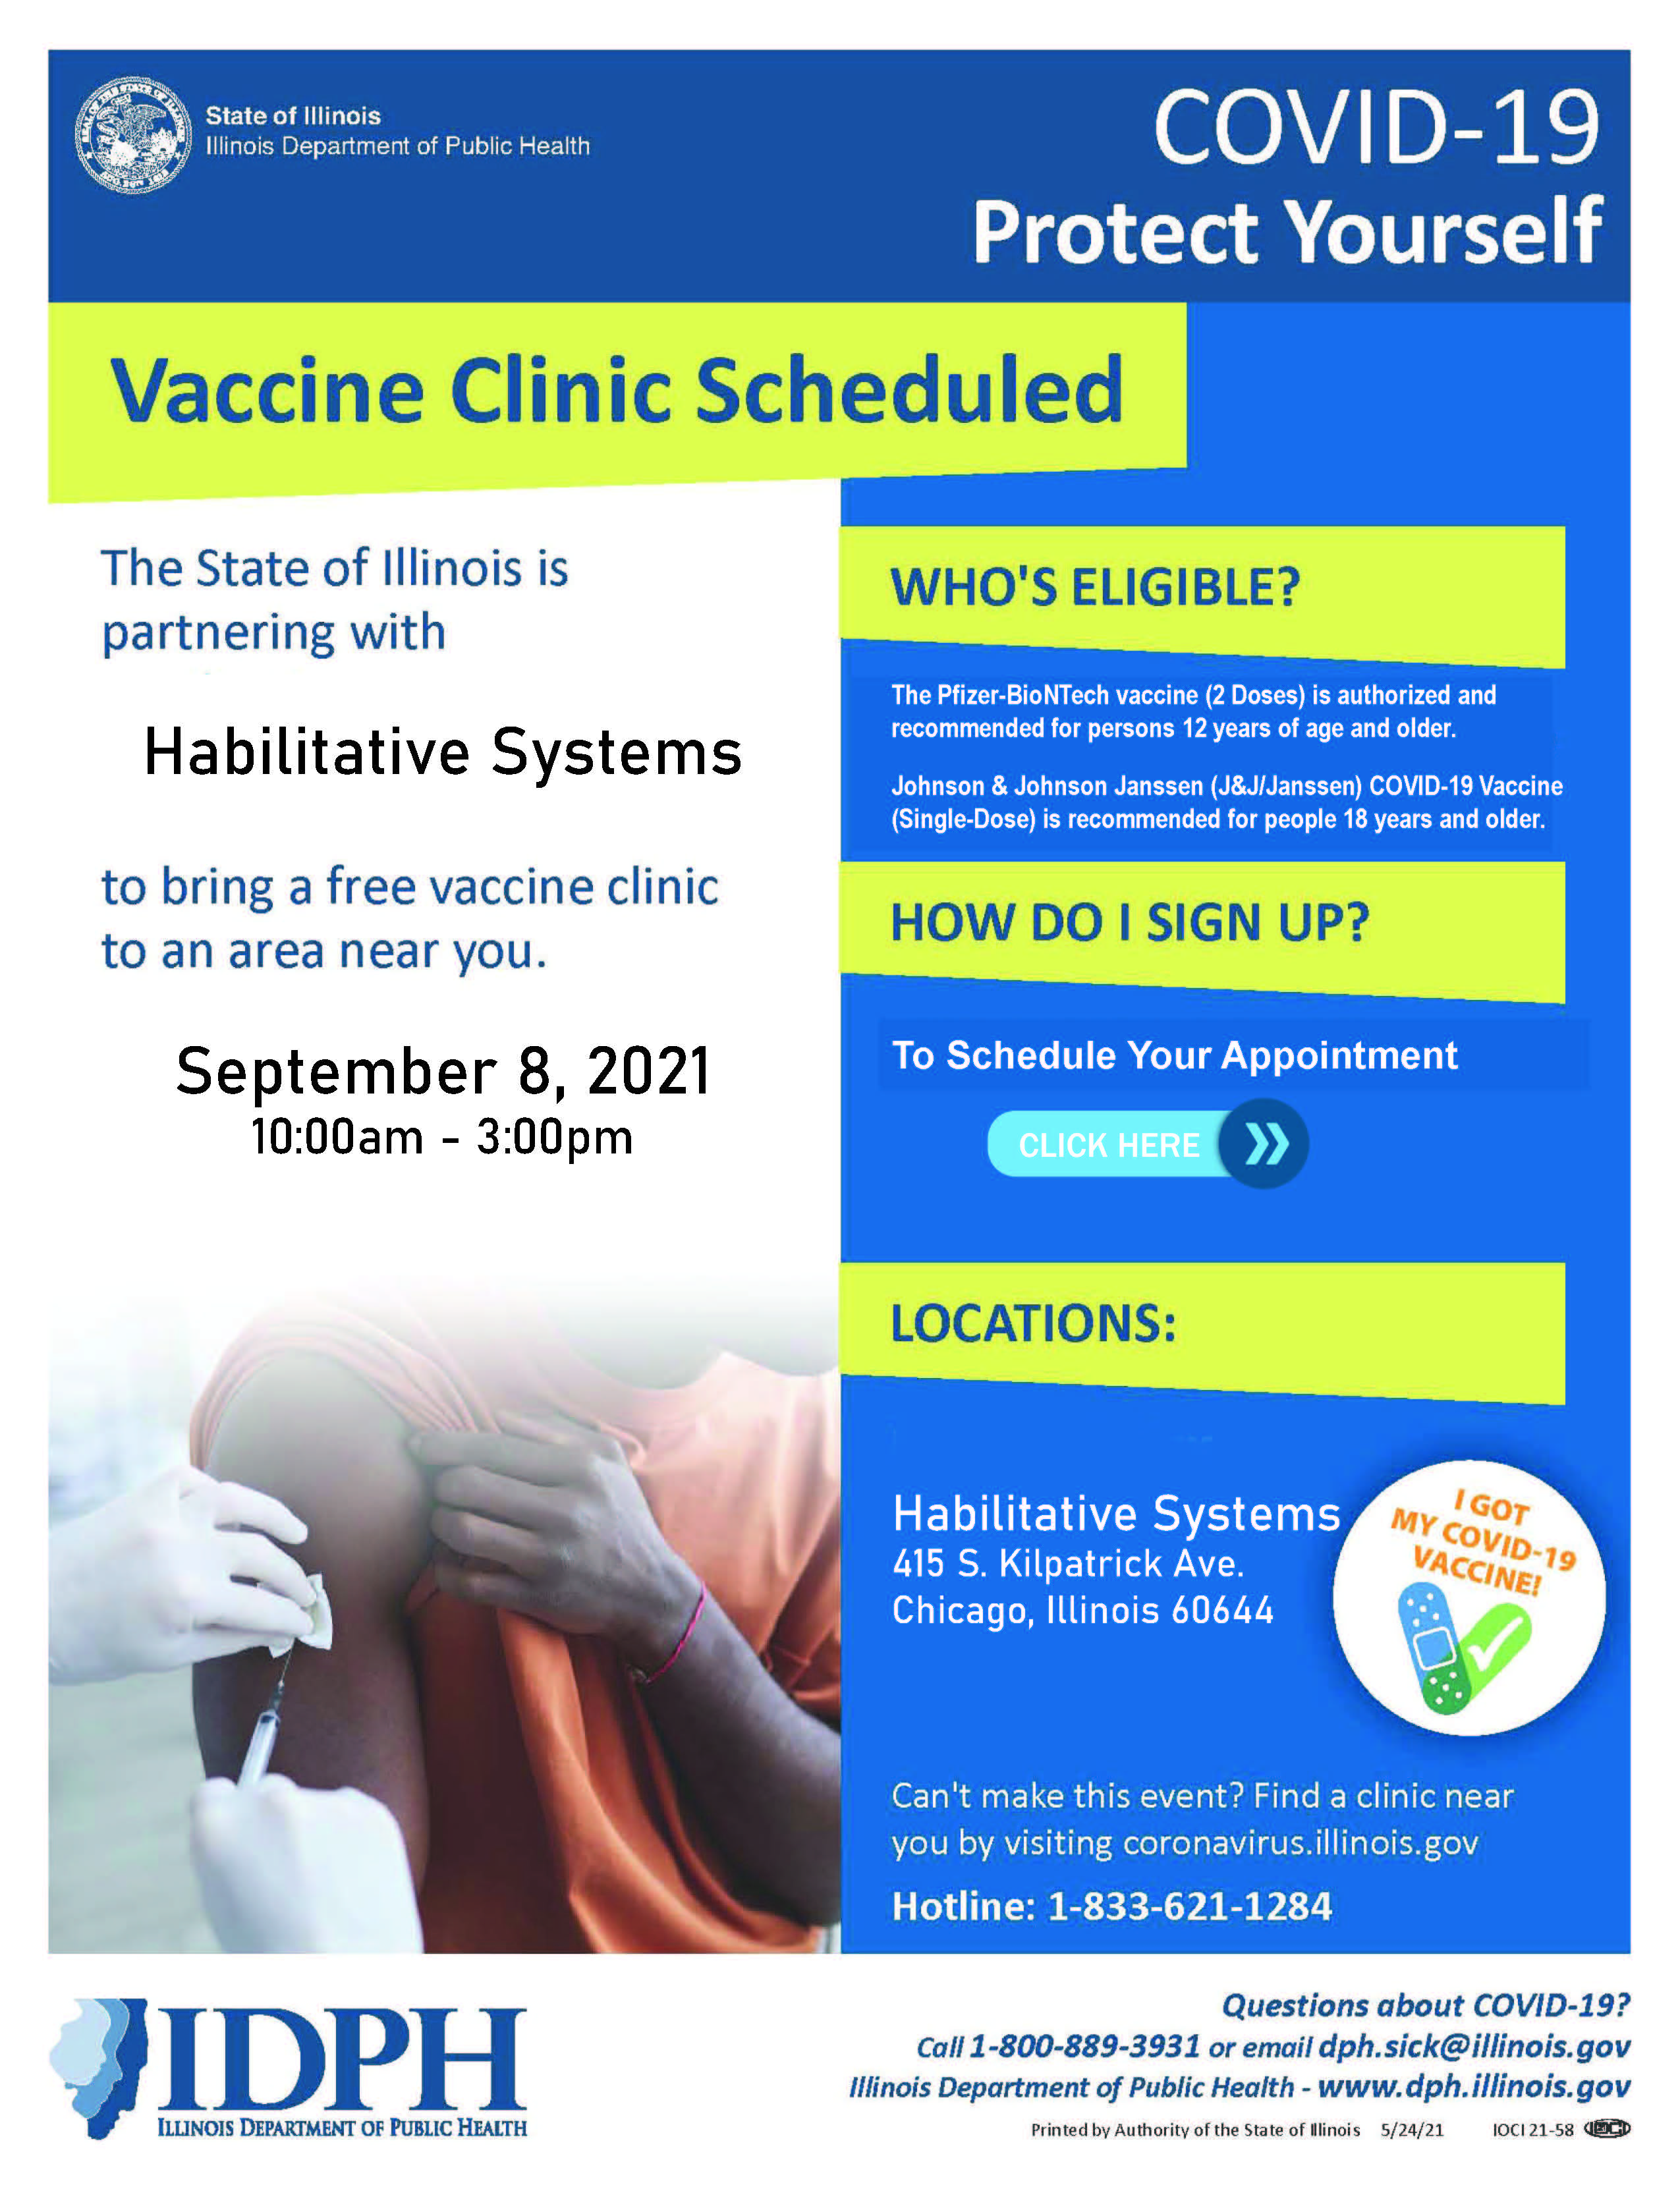 HSI Covid 19 Vaccine Flyerf